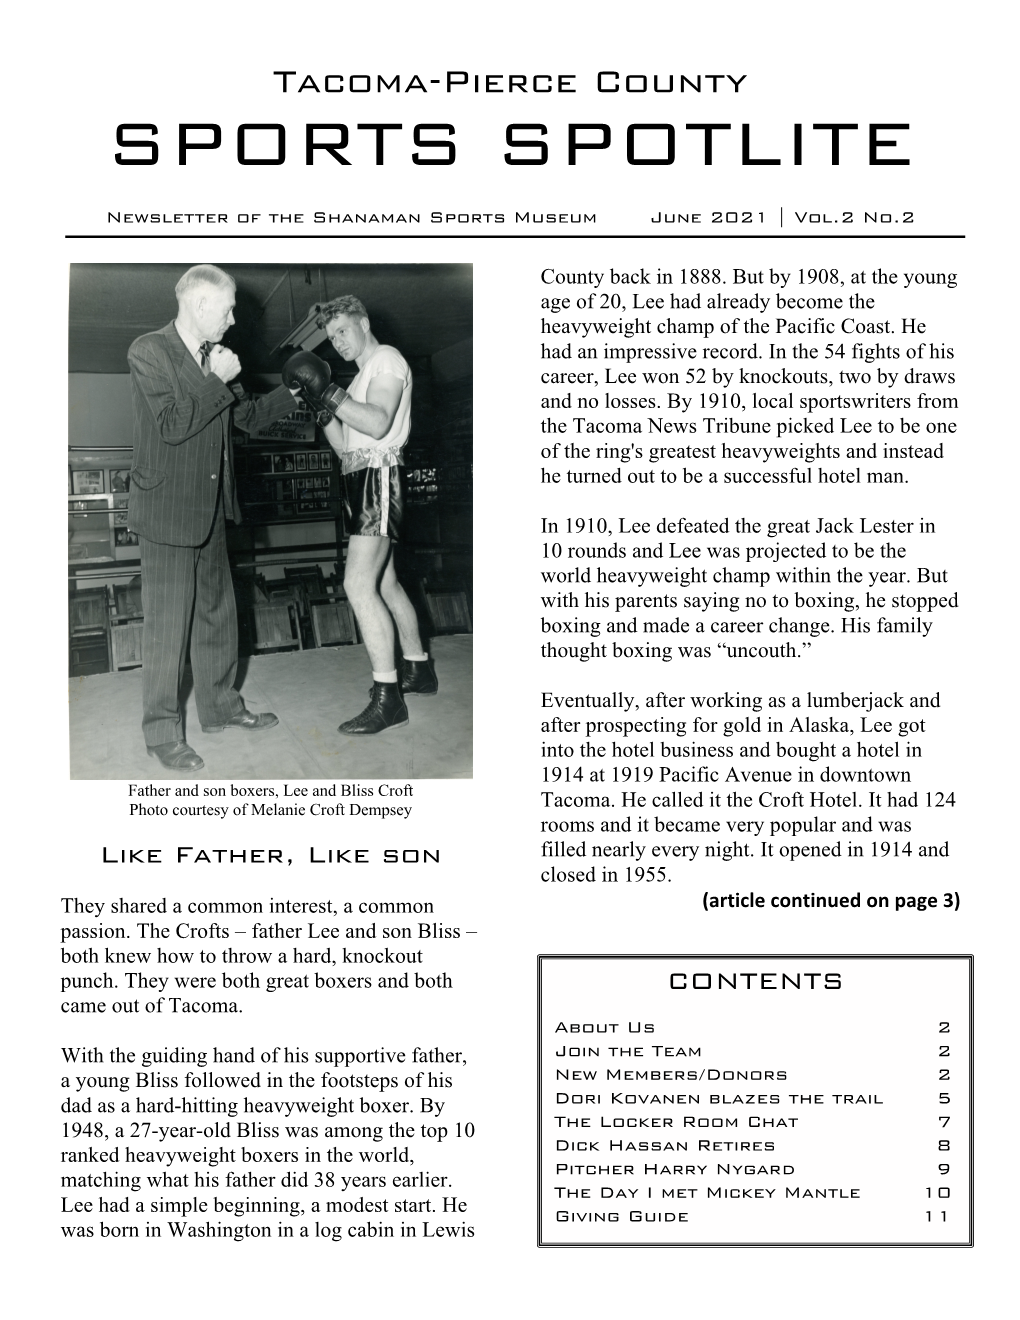 Sports Spotlite Vol. 2 No. 2, June 2021